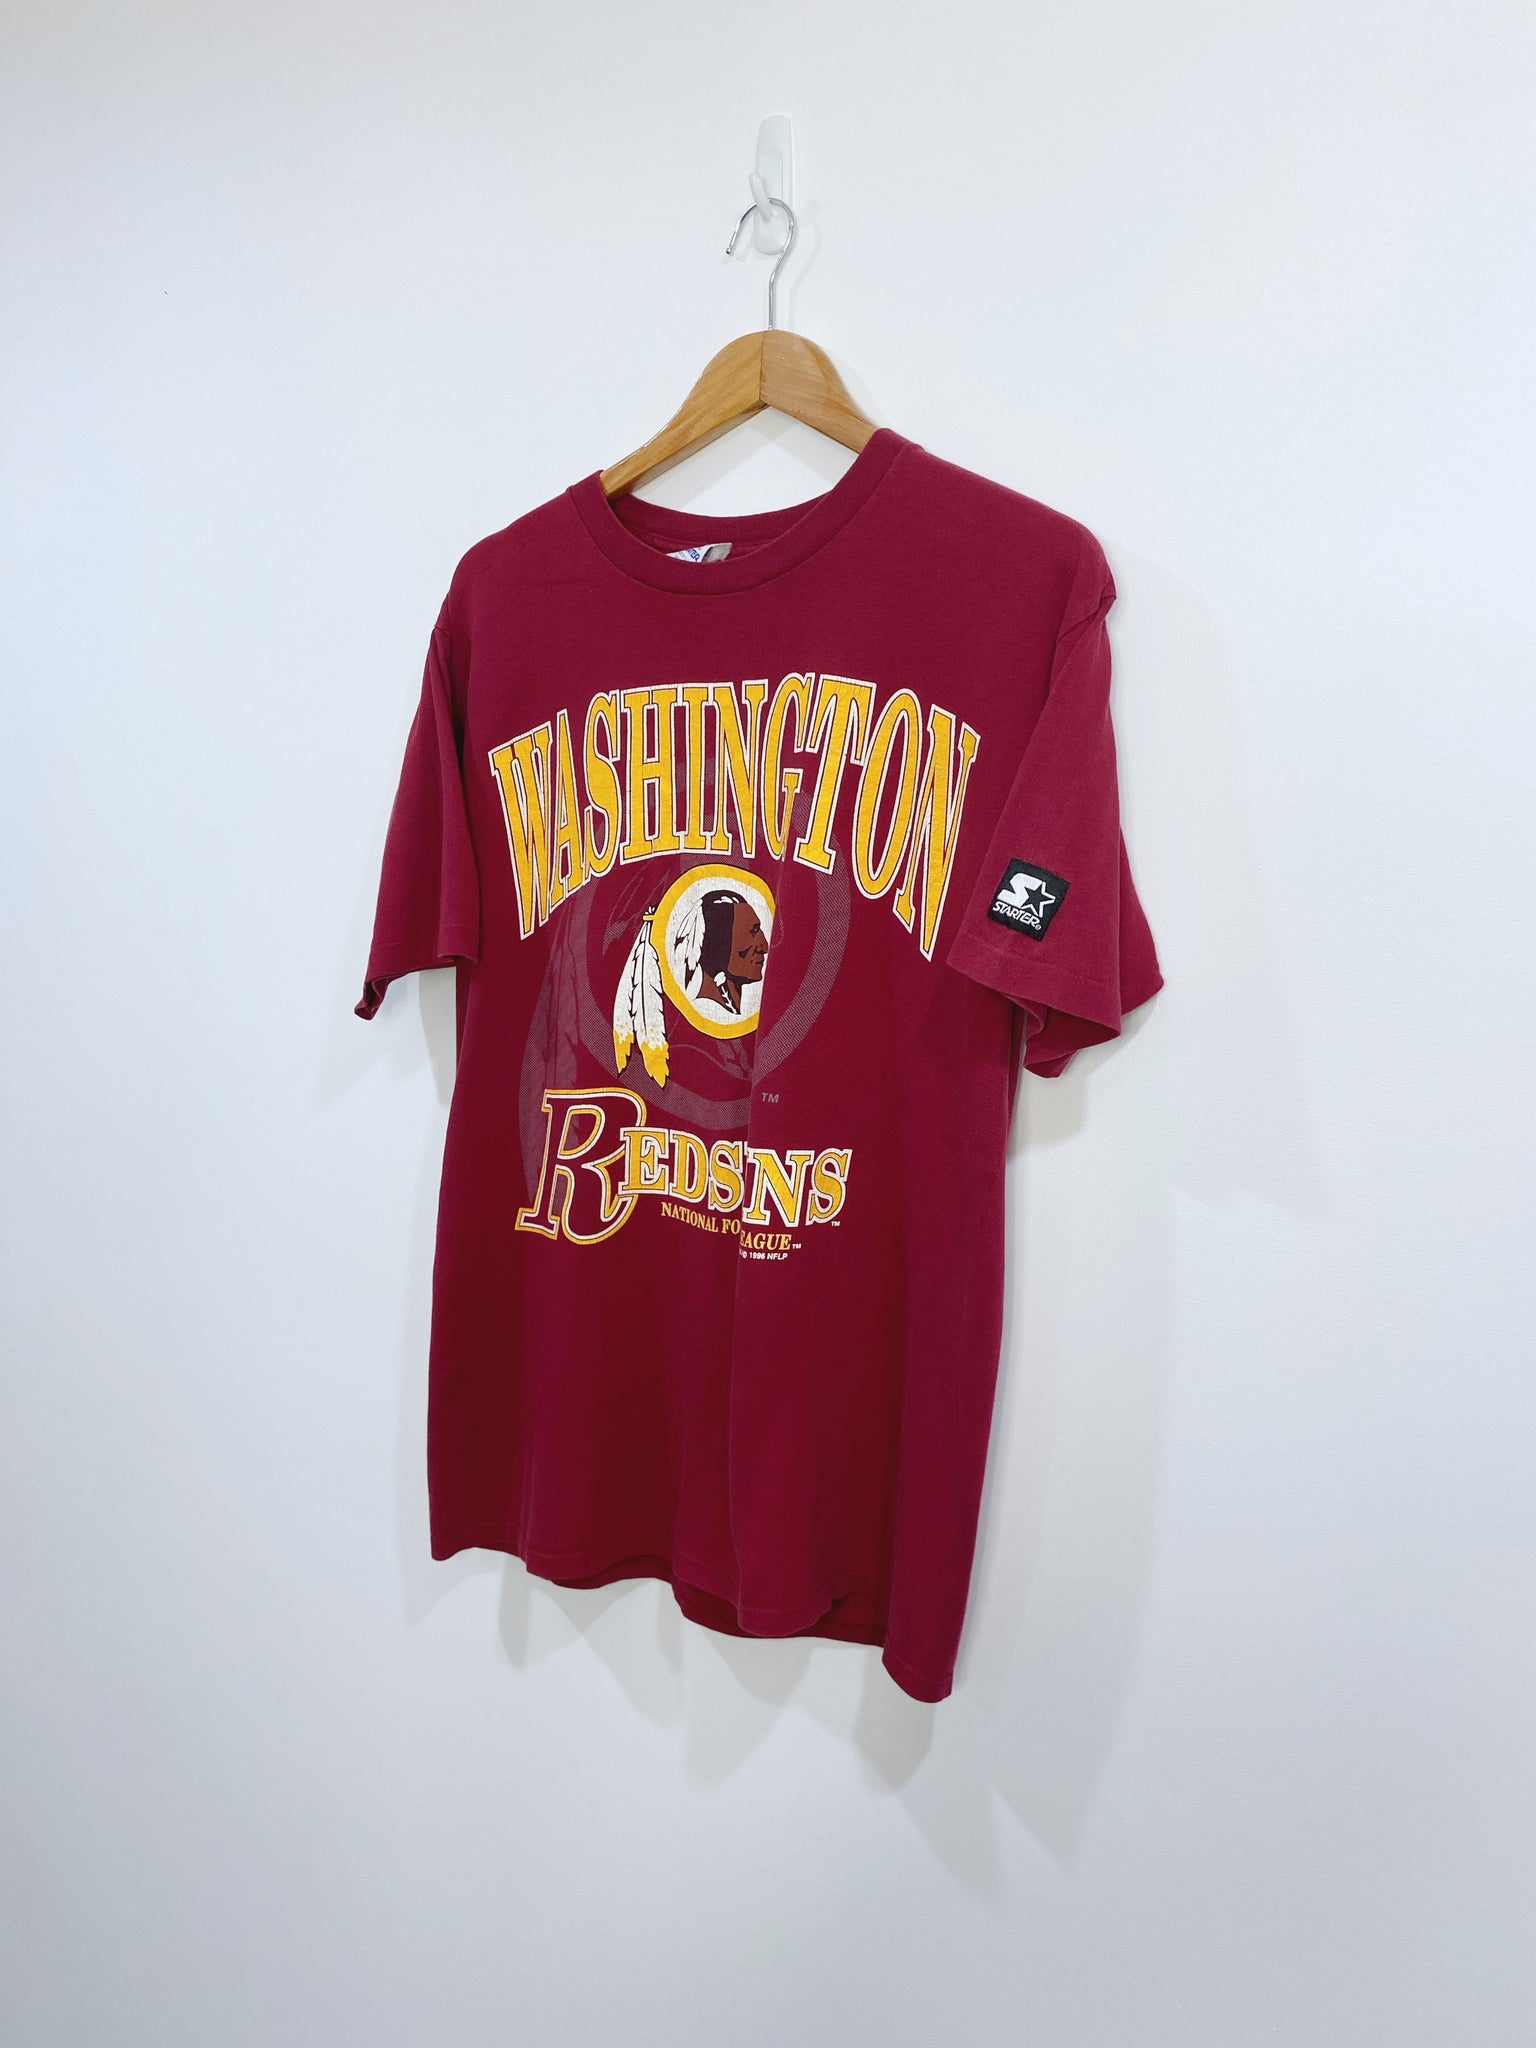 Vintage 1996 Washington Redskins T-shirt M